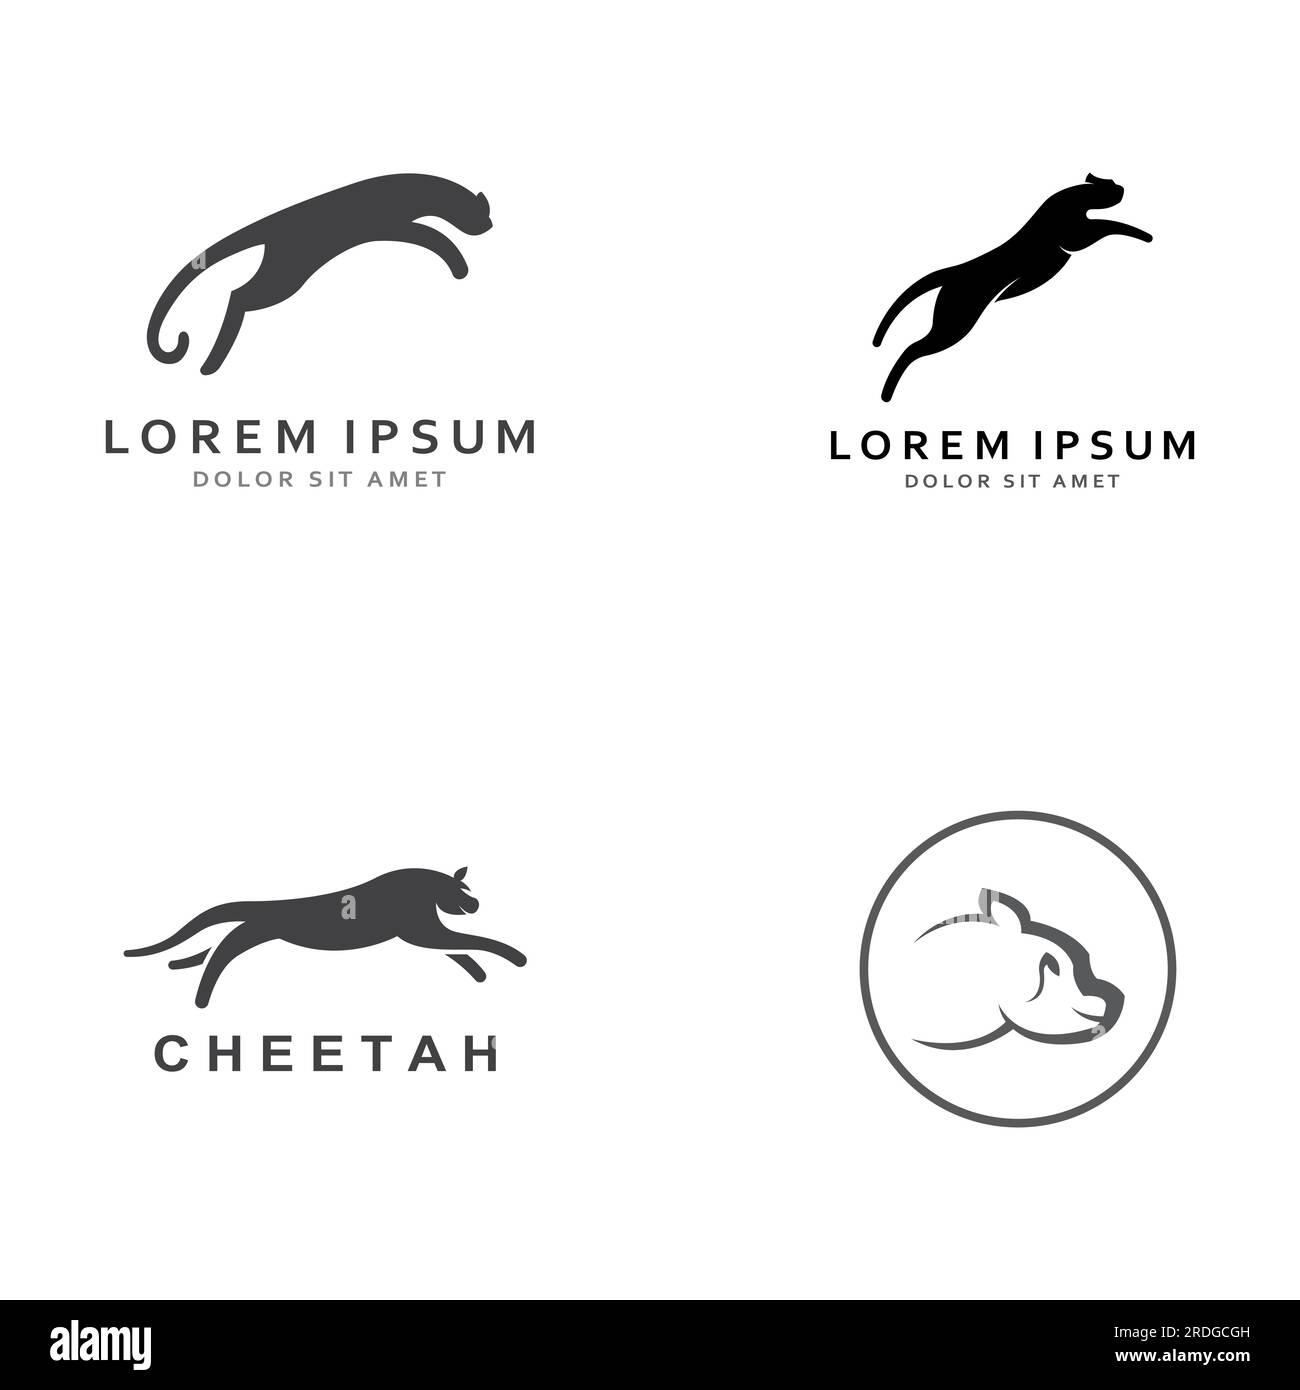 https://c8.alamy.com/comp/2RDGCGH/cheetah-animal-logo-with-vector-design-concept-2RDGCGH.jpg